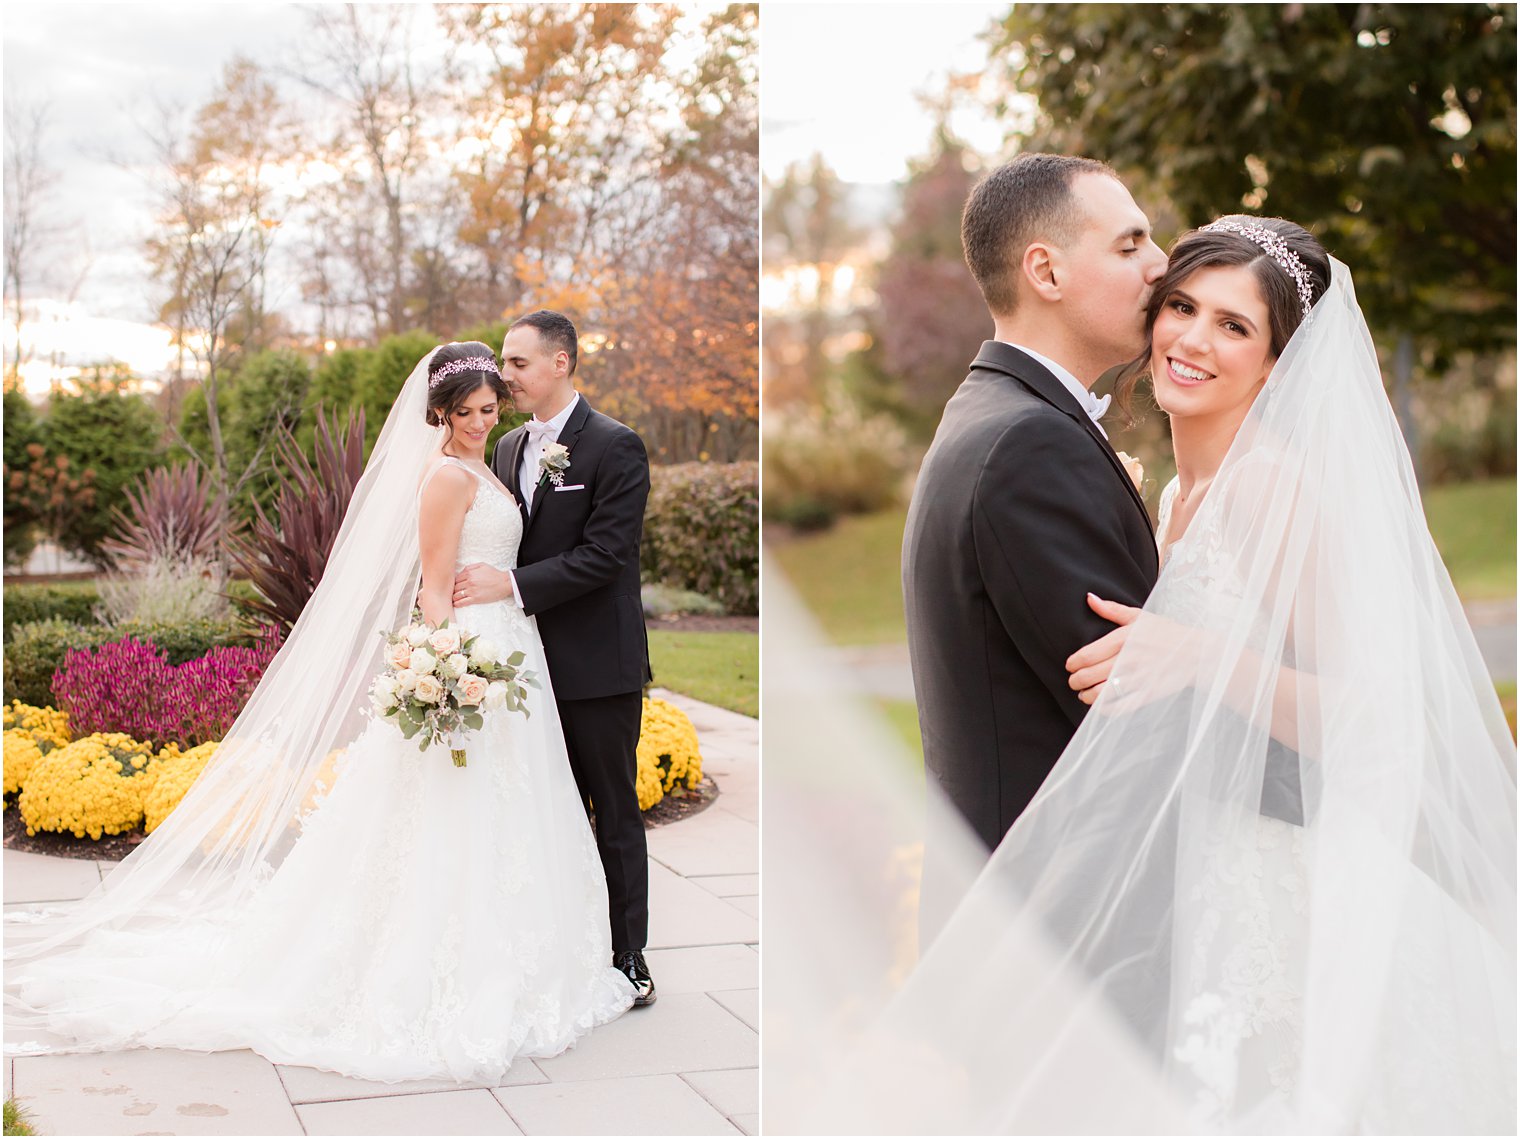 Idalia Photography captures fall wedding portraits in New Jersey